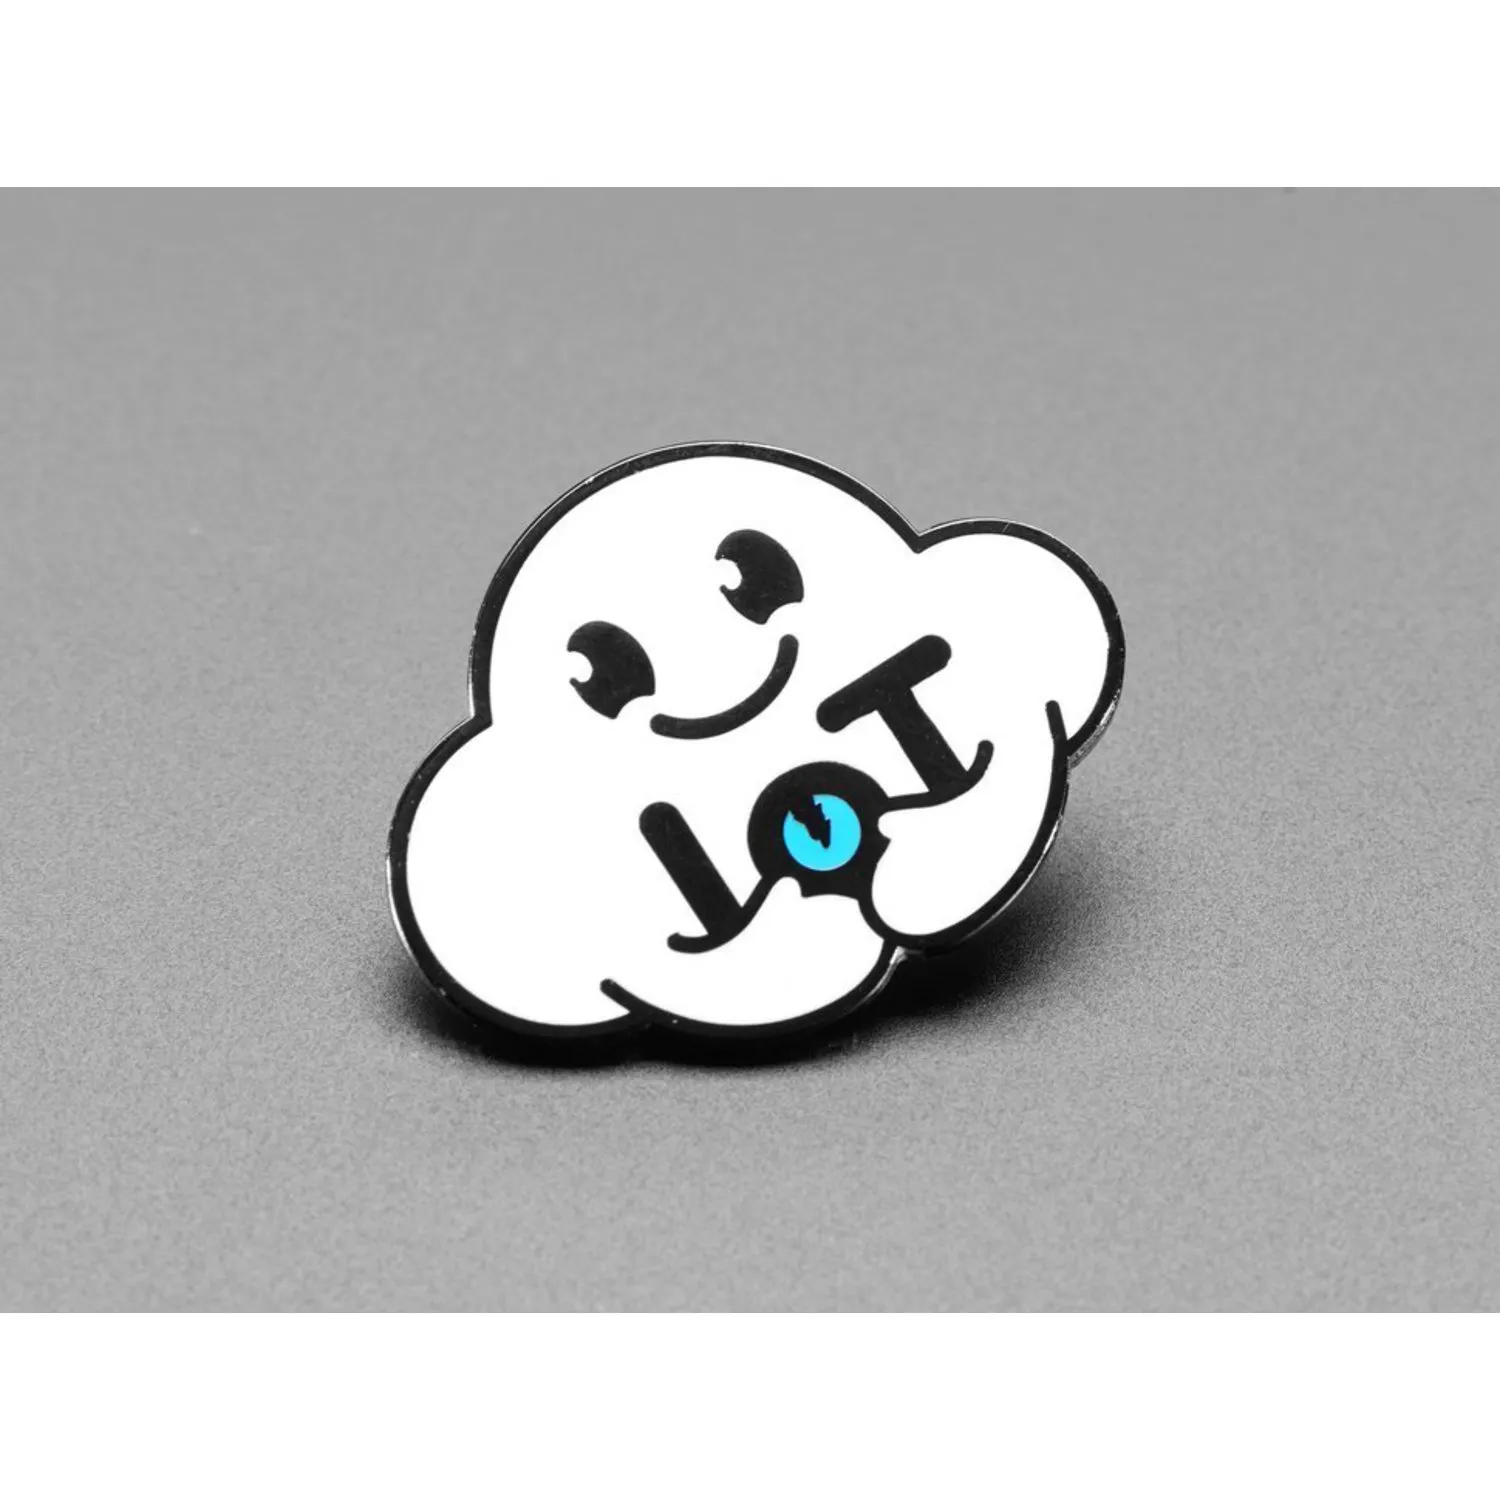 Photo of Nimbus the Friendly Cloud Entity - Limited Edition Enamel Pin